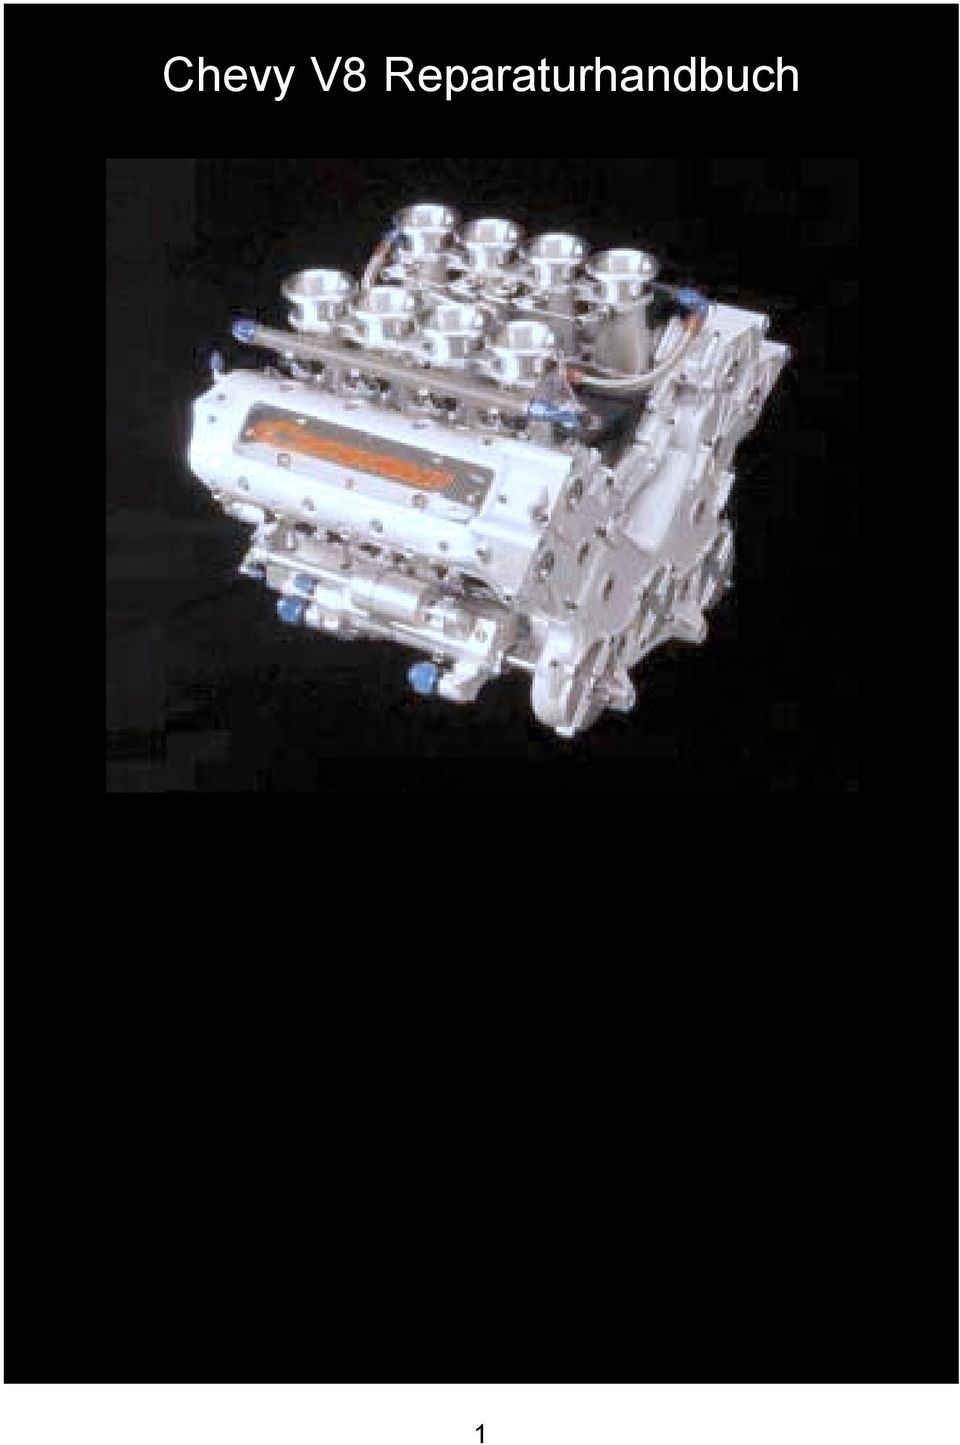 GMC Getriebe Chevy 4,9-5,7 SmallBlock Rep-Anleitung Deutsch incl Chevy